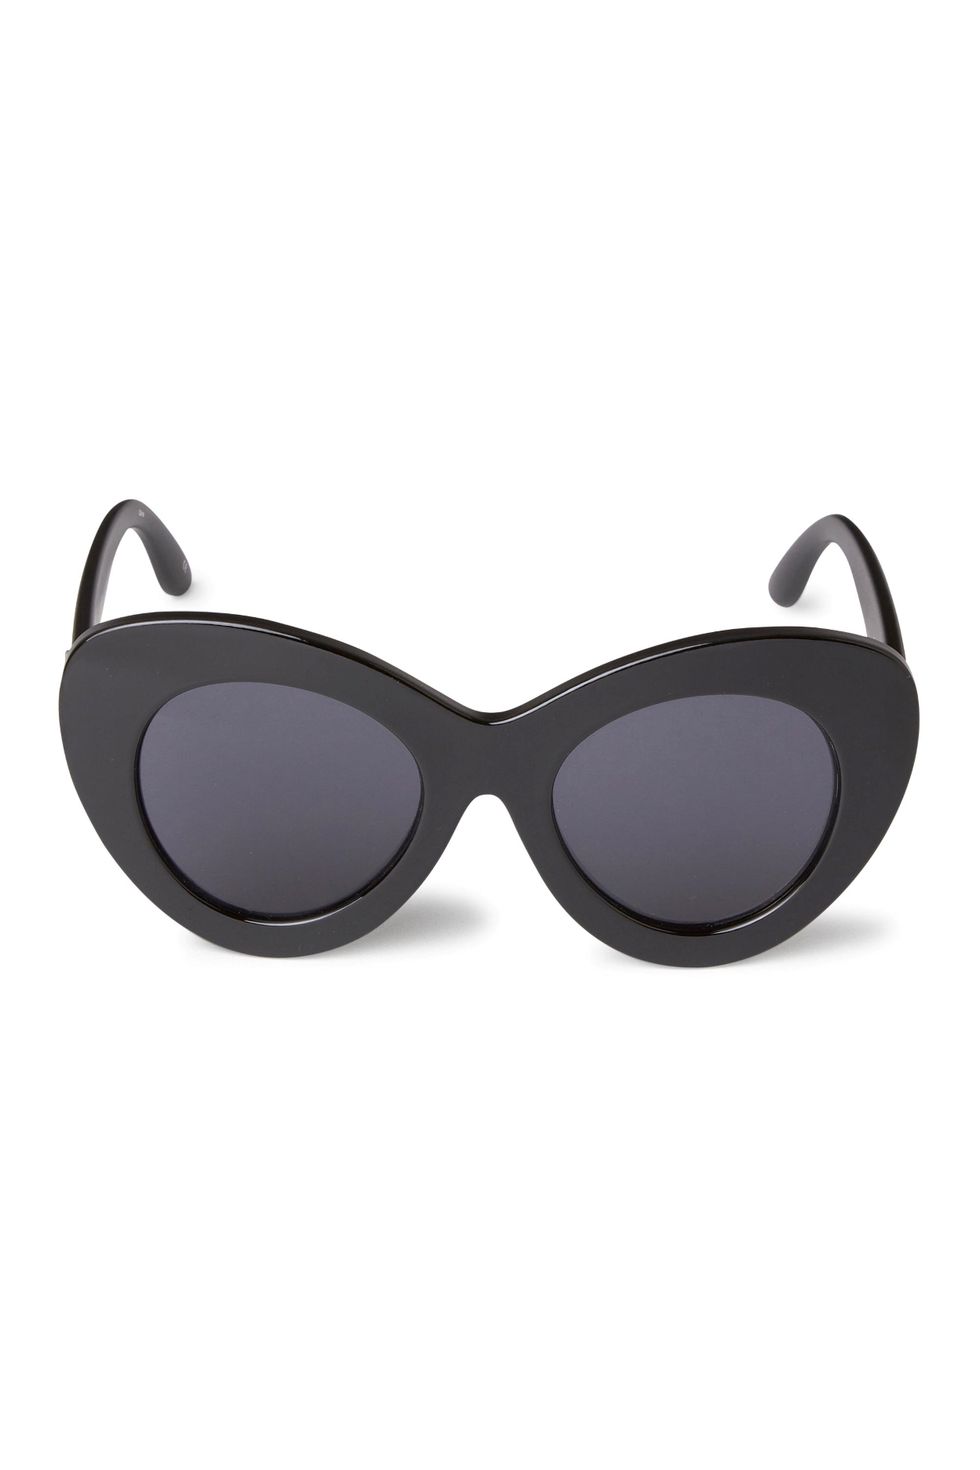 <p>€ 65 - verkrijgbaar via&nbsp;<a href="http://shop.weekday.com/nl/Womens_shop/Accessories/Sunglasses/Go_Go_Go_Sunglasses/5131397-6831321.1#c-47958#Rel?PC=Women's shop_Accessories_Sunglasses | filter" target="_blank" data-tracking-id="recirc-text-link">weekday.com</a><span class="redactor-invisible-space" data-verified="redactor" data-redactor-tag="span" data-redactor-class="redactor-invisible-space"><a href="http://shop.weekday.com/nl/Womens_shop/Accessories/Sunglasses/Go_Go_Go_Sunglasses/5131397-6831321.1#c-47958#Rel?PC=Women's shop_Accessories_Sunglasses | filter"></a></span></p>